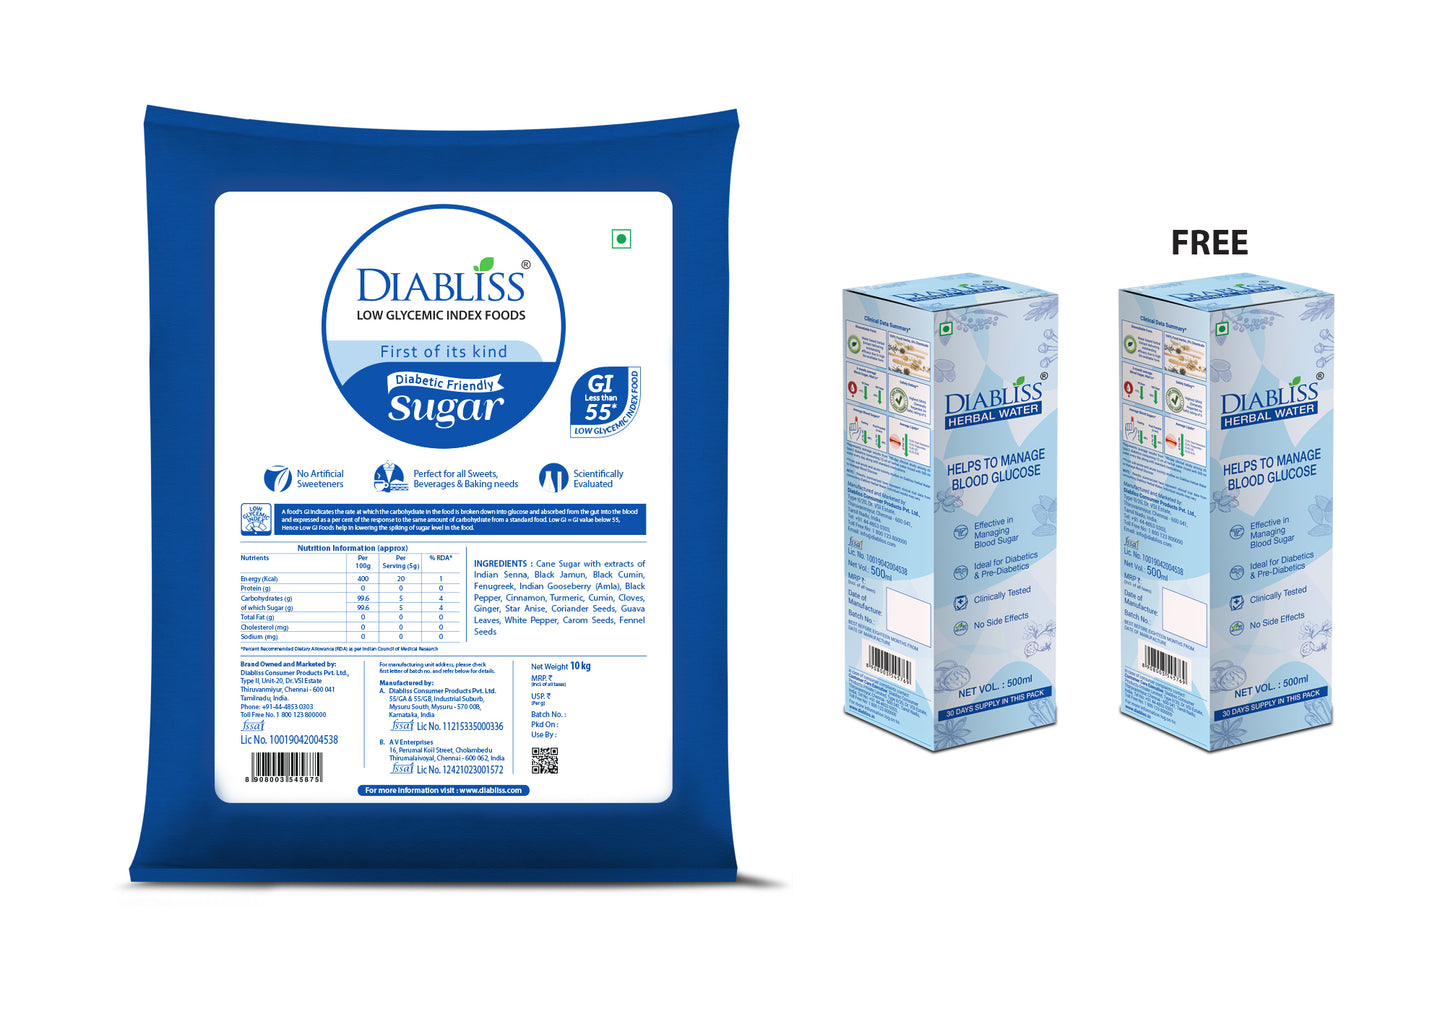 Diabliss Diabetic Friendly Sugar 10 kg Bag - Herbal Water for Blood Glucose Management 500ml Bottle pack of 2